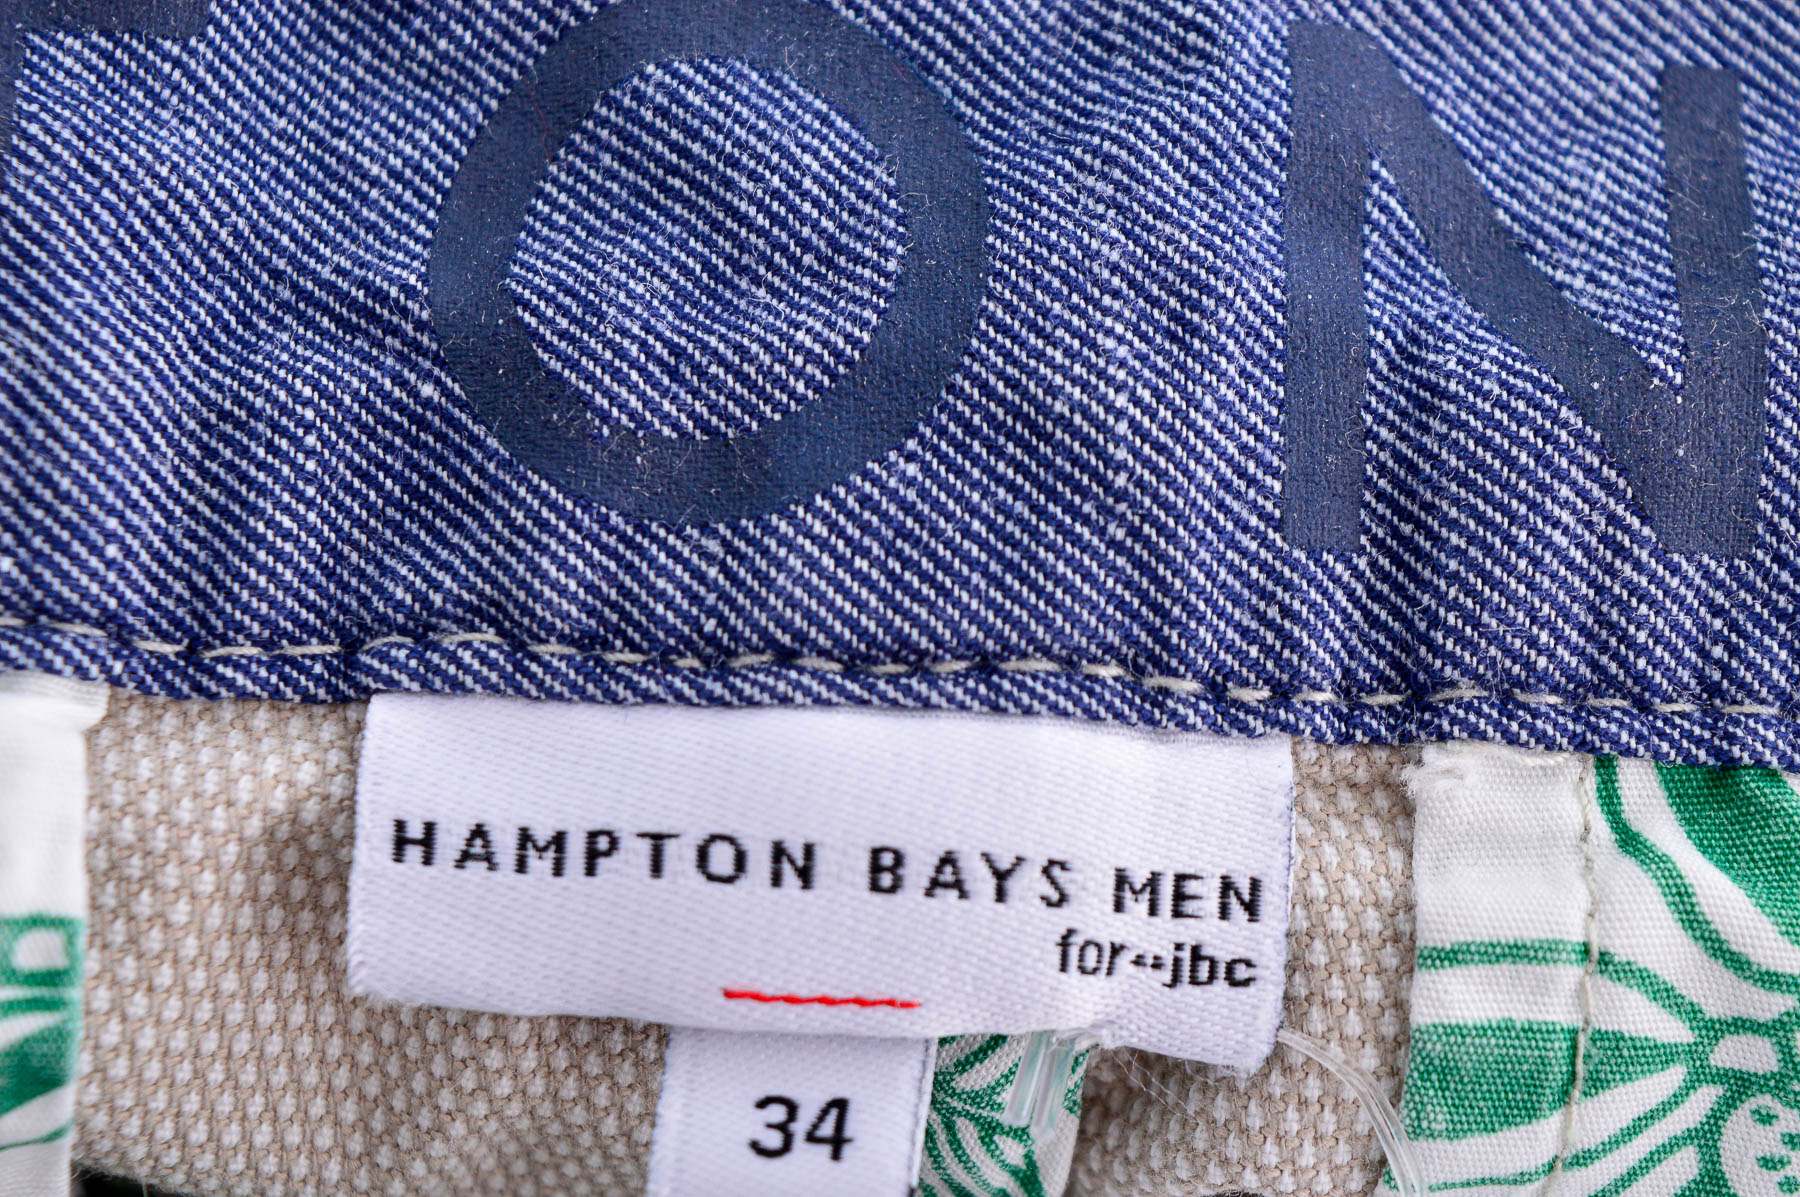 Men's shorts - HAMPTON BAYS MEN for jbc - 2